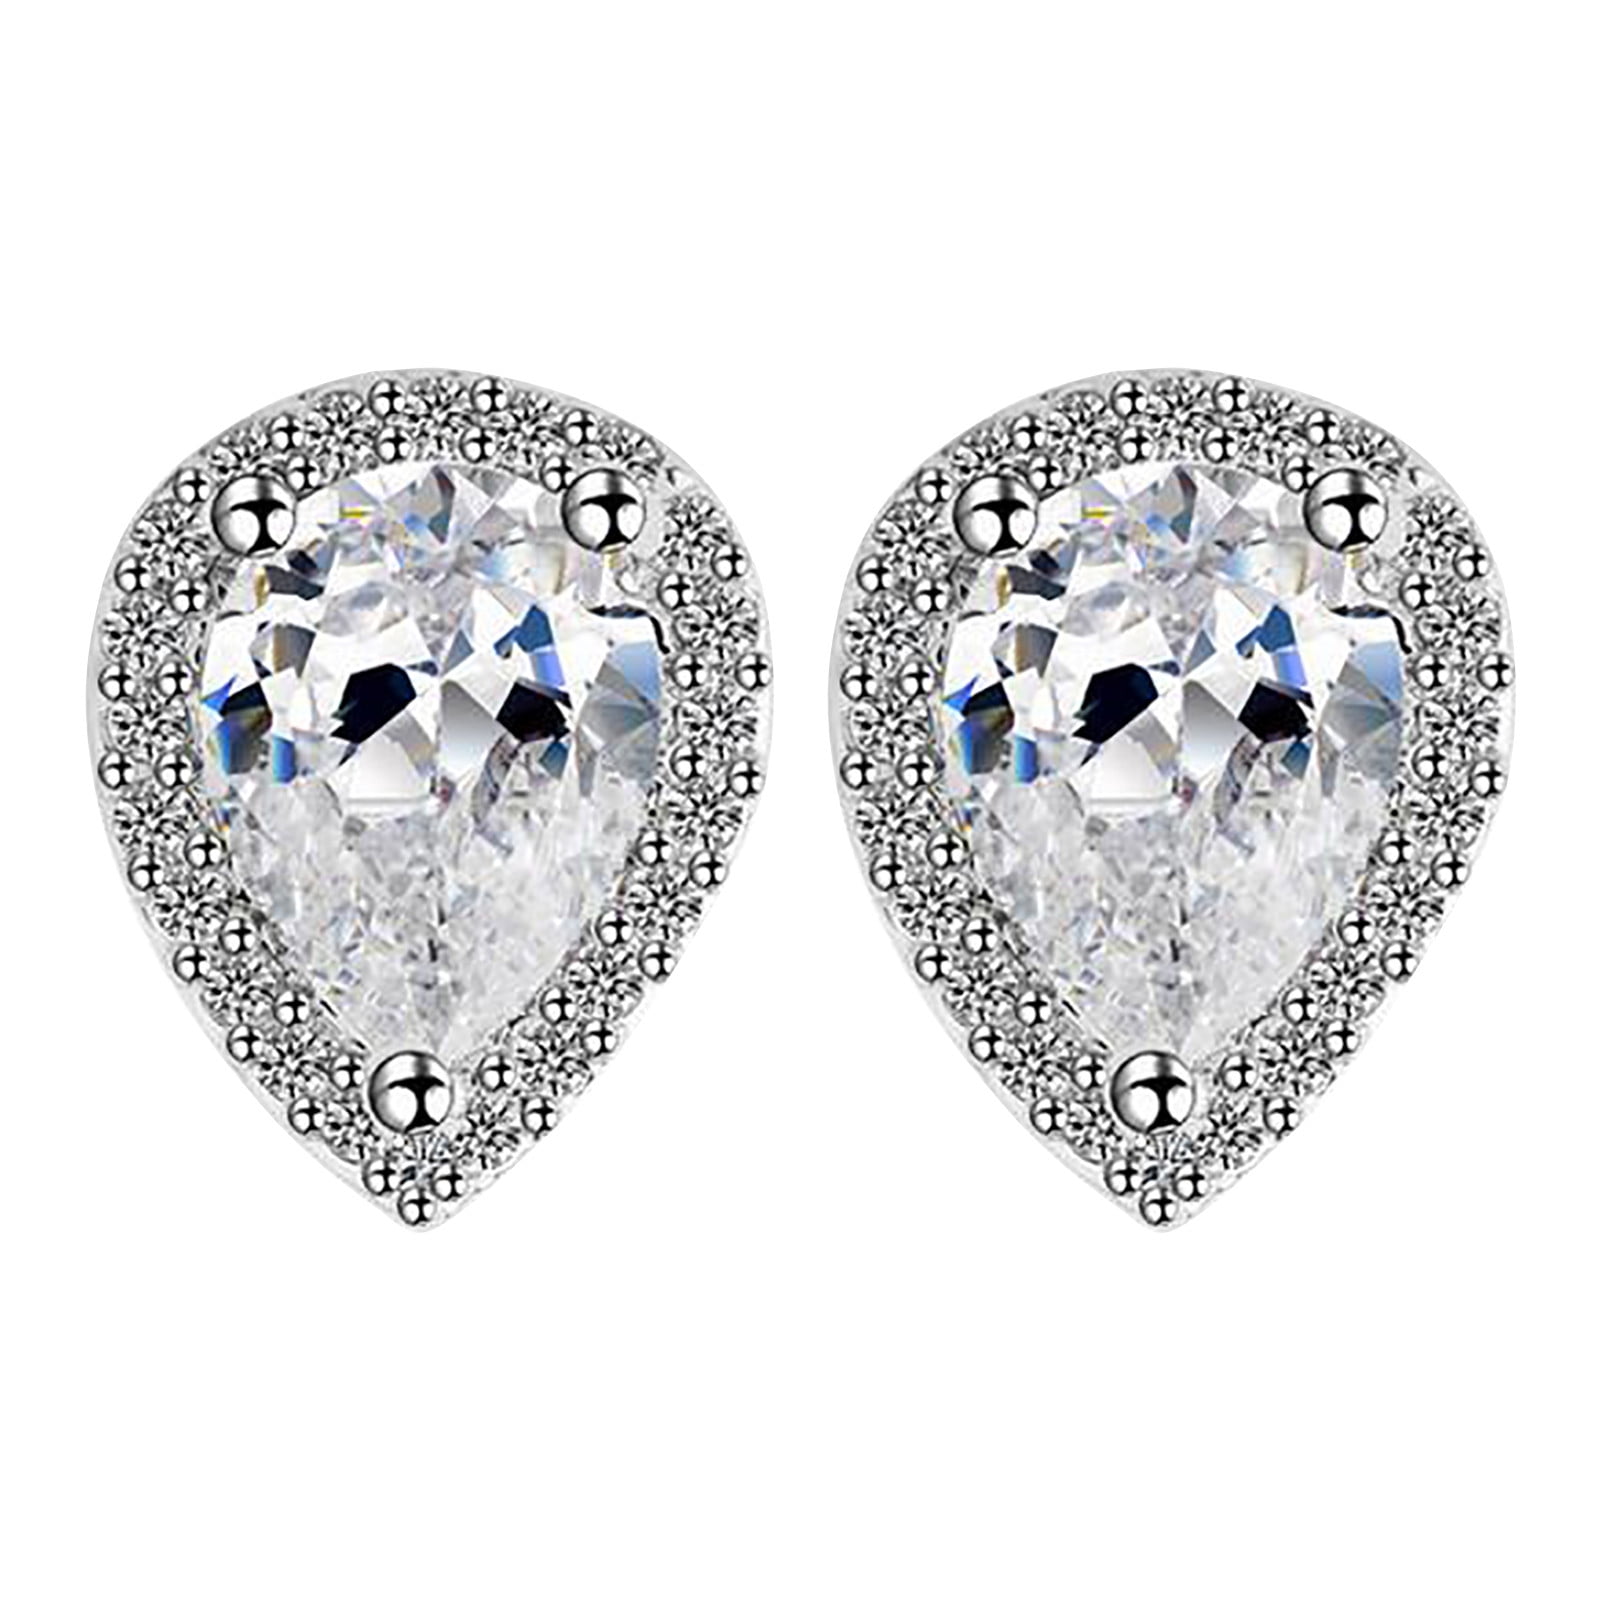 〖Hellobye〗Water Drop Shaped Full Diamond Love Shaped Earing Fashion ...